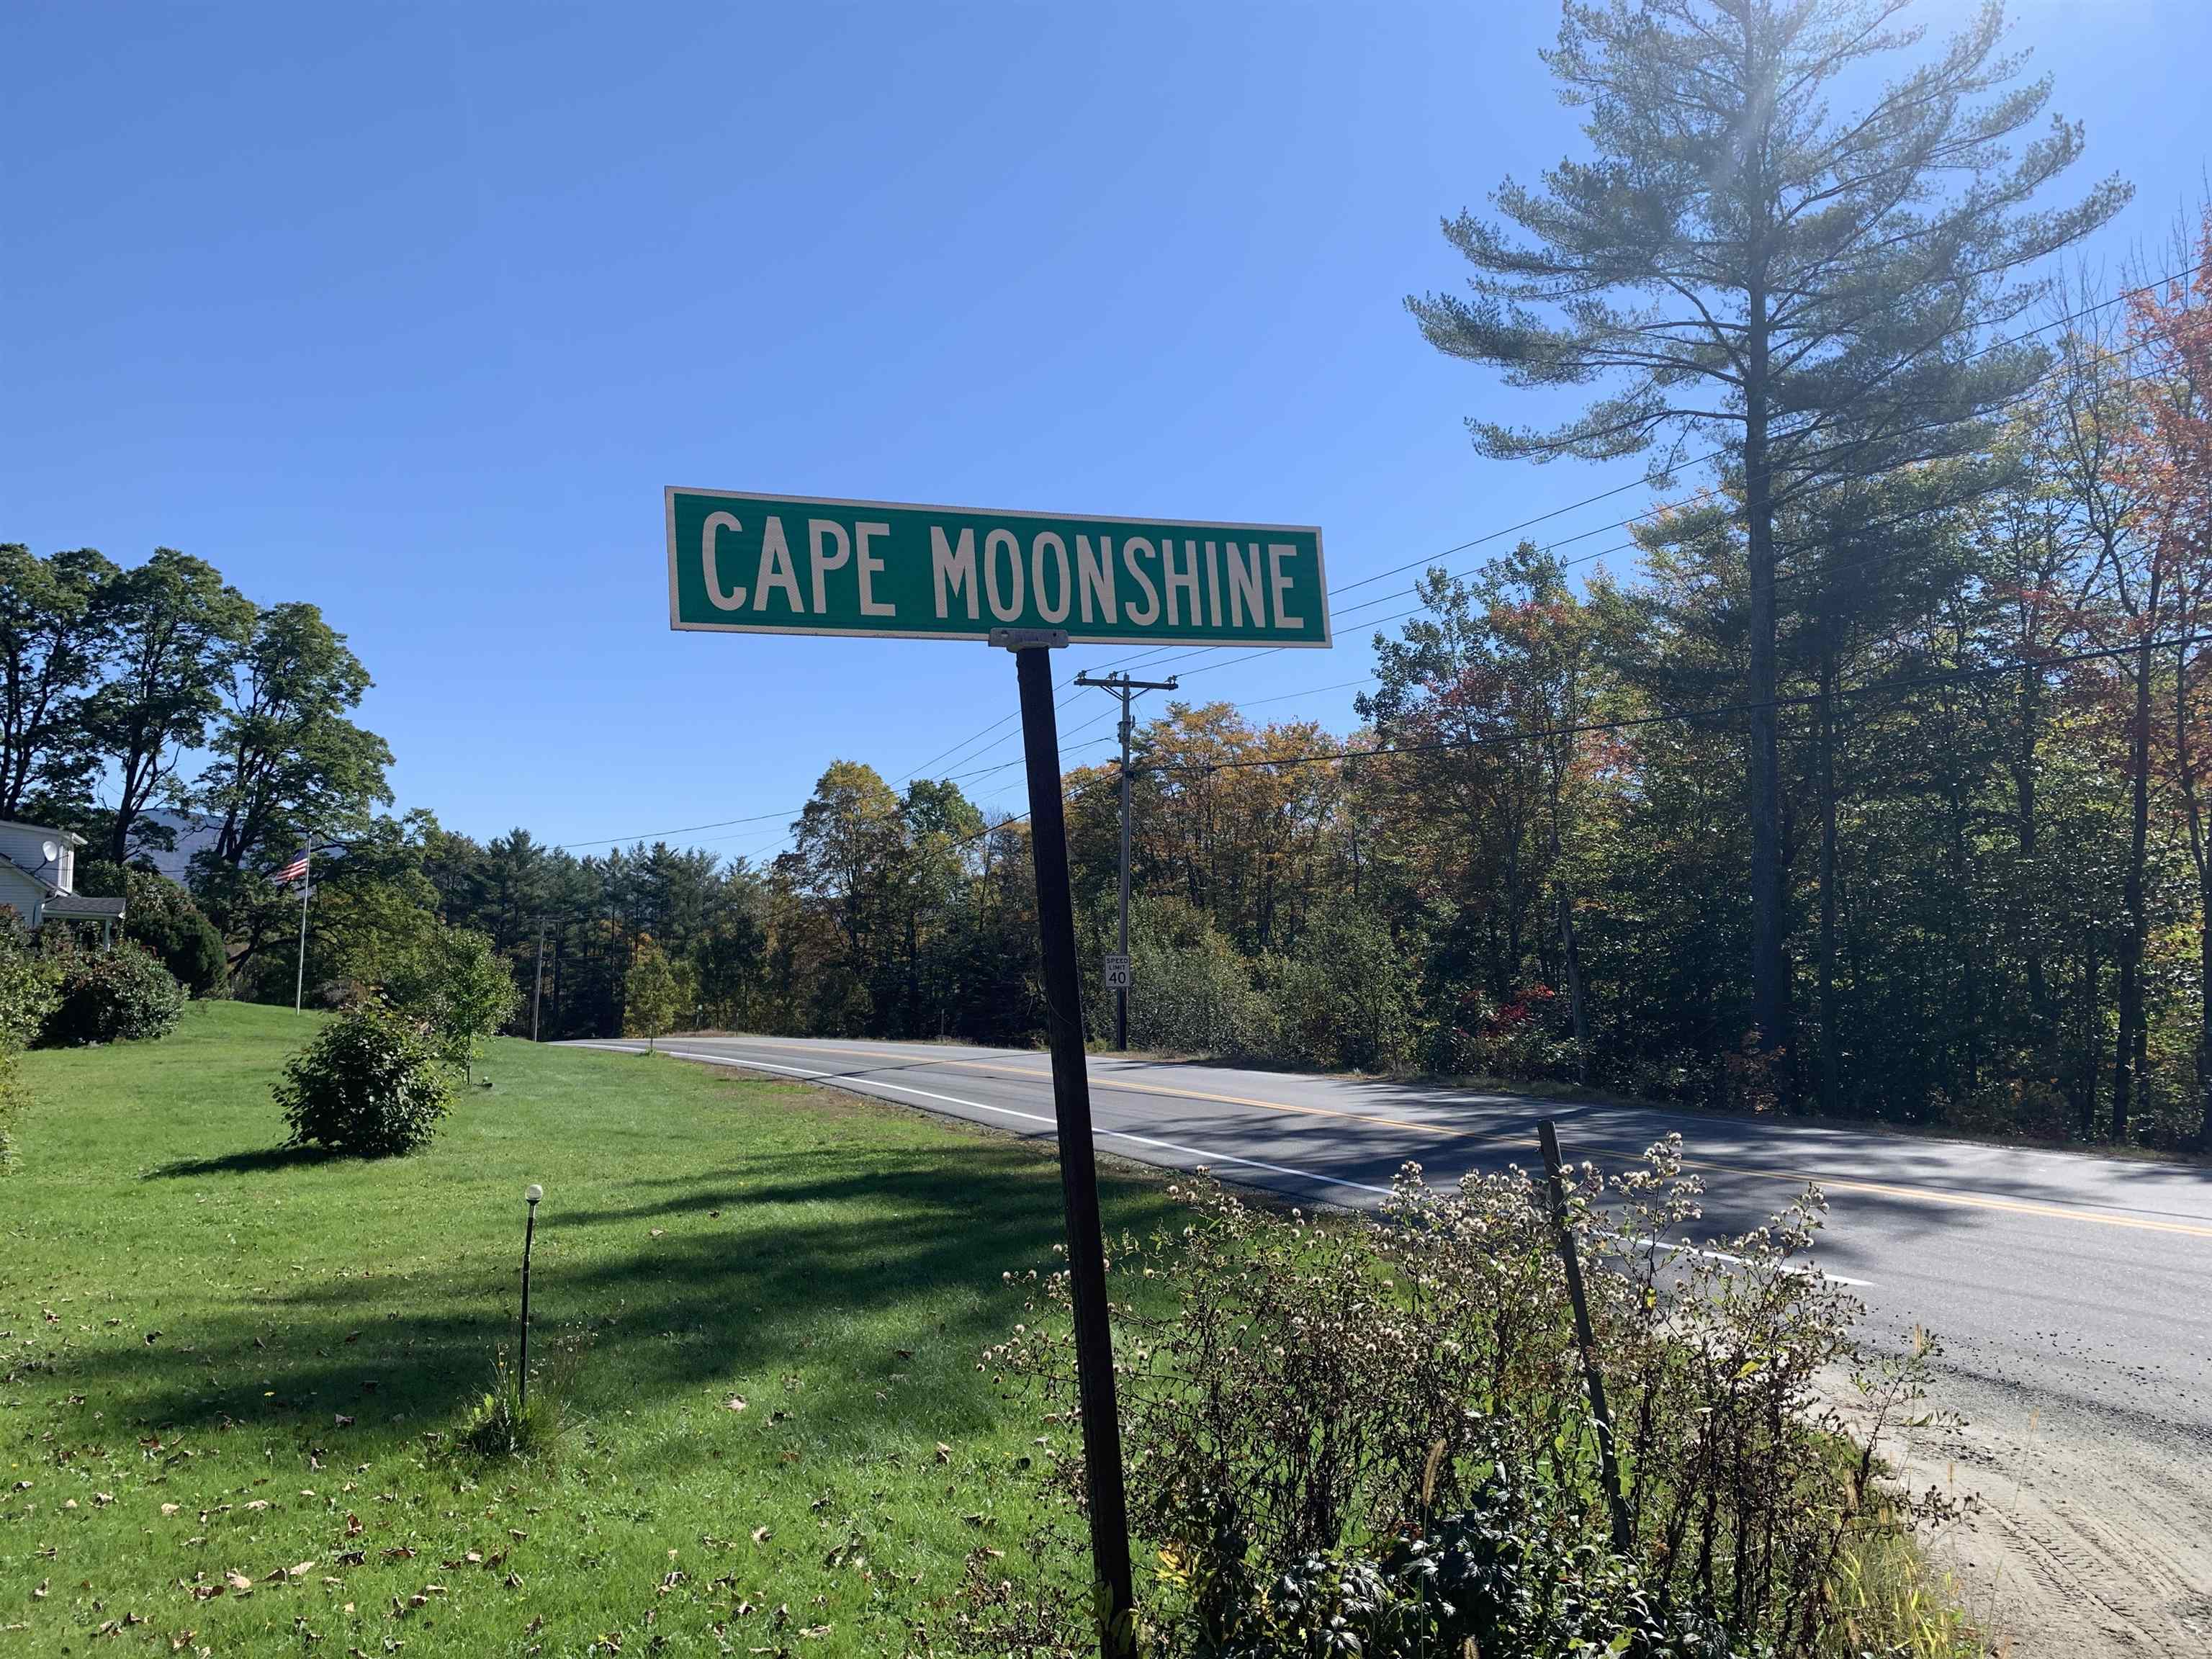  Cape Moonshine Road1-13  Wentworth, NH Photo